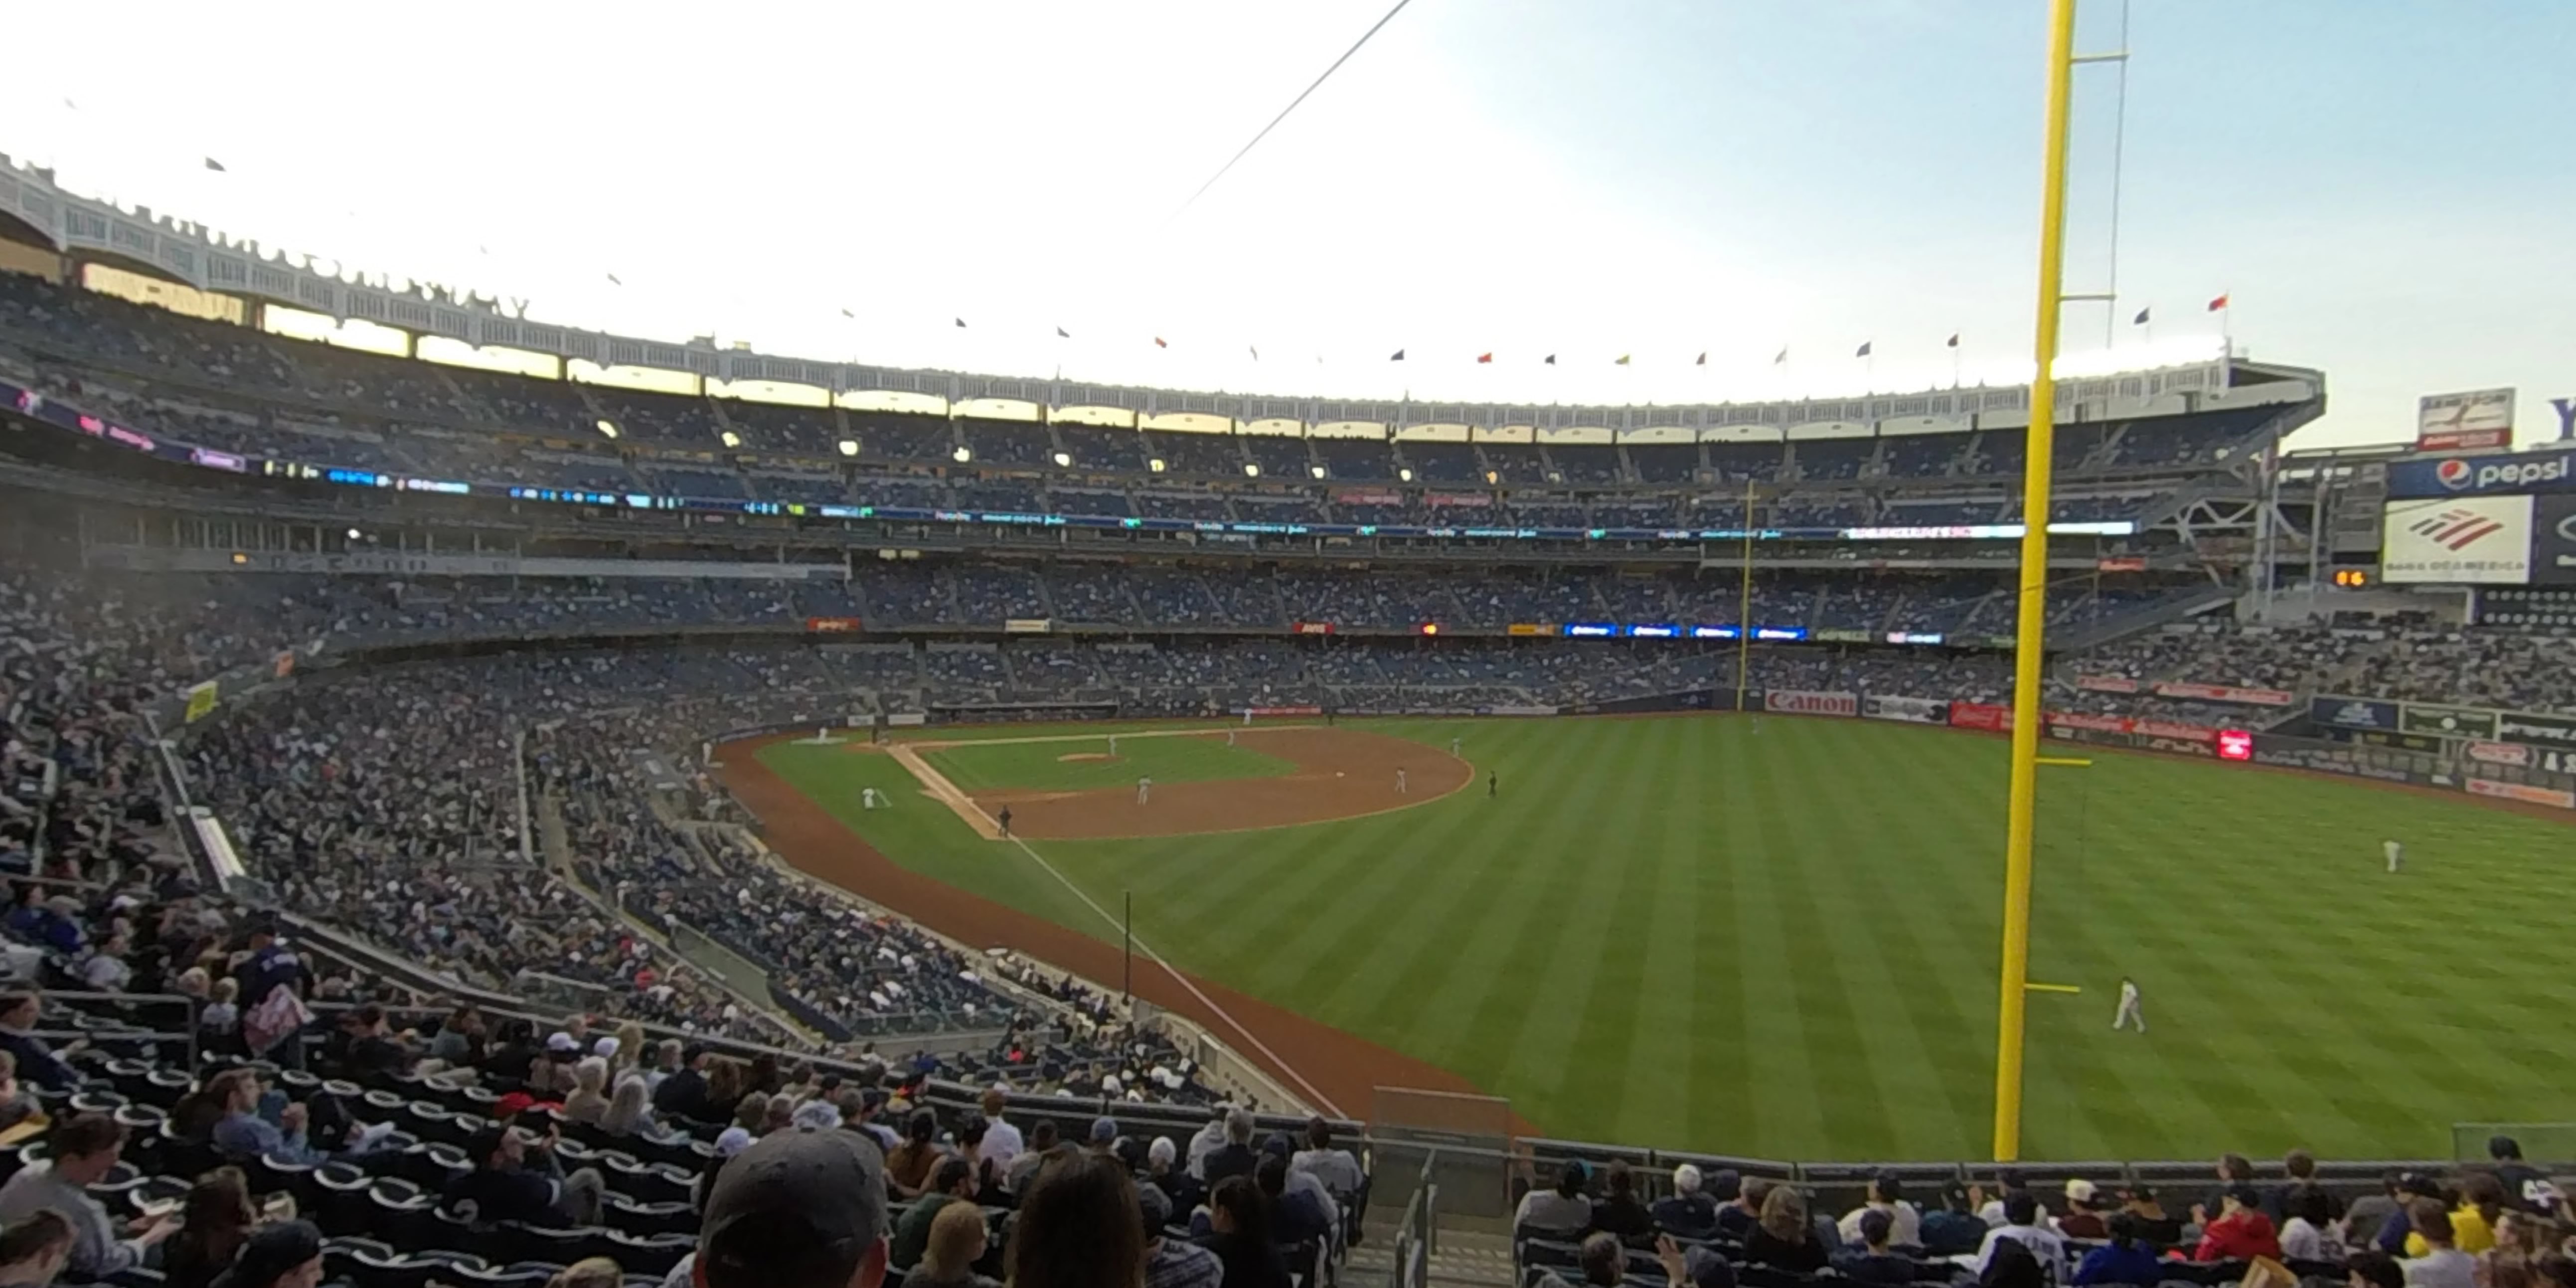 section 208 panoramic seat view  for baseball - yankee stadium